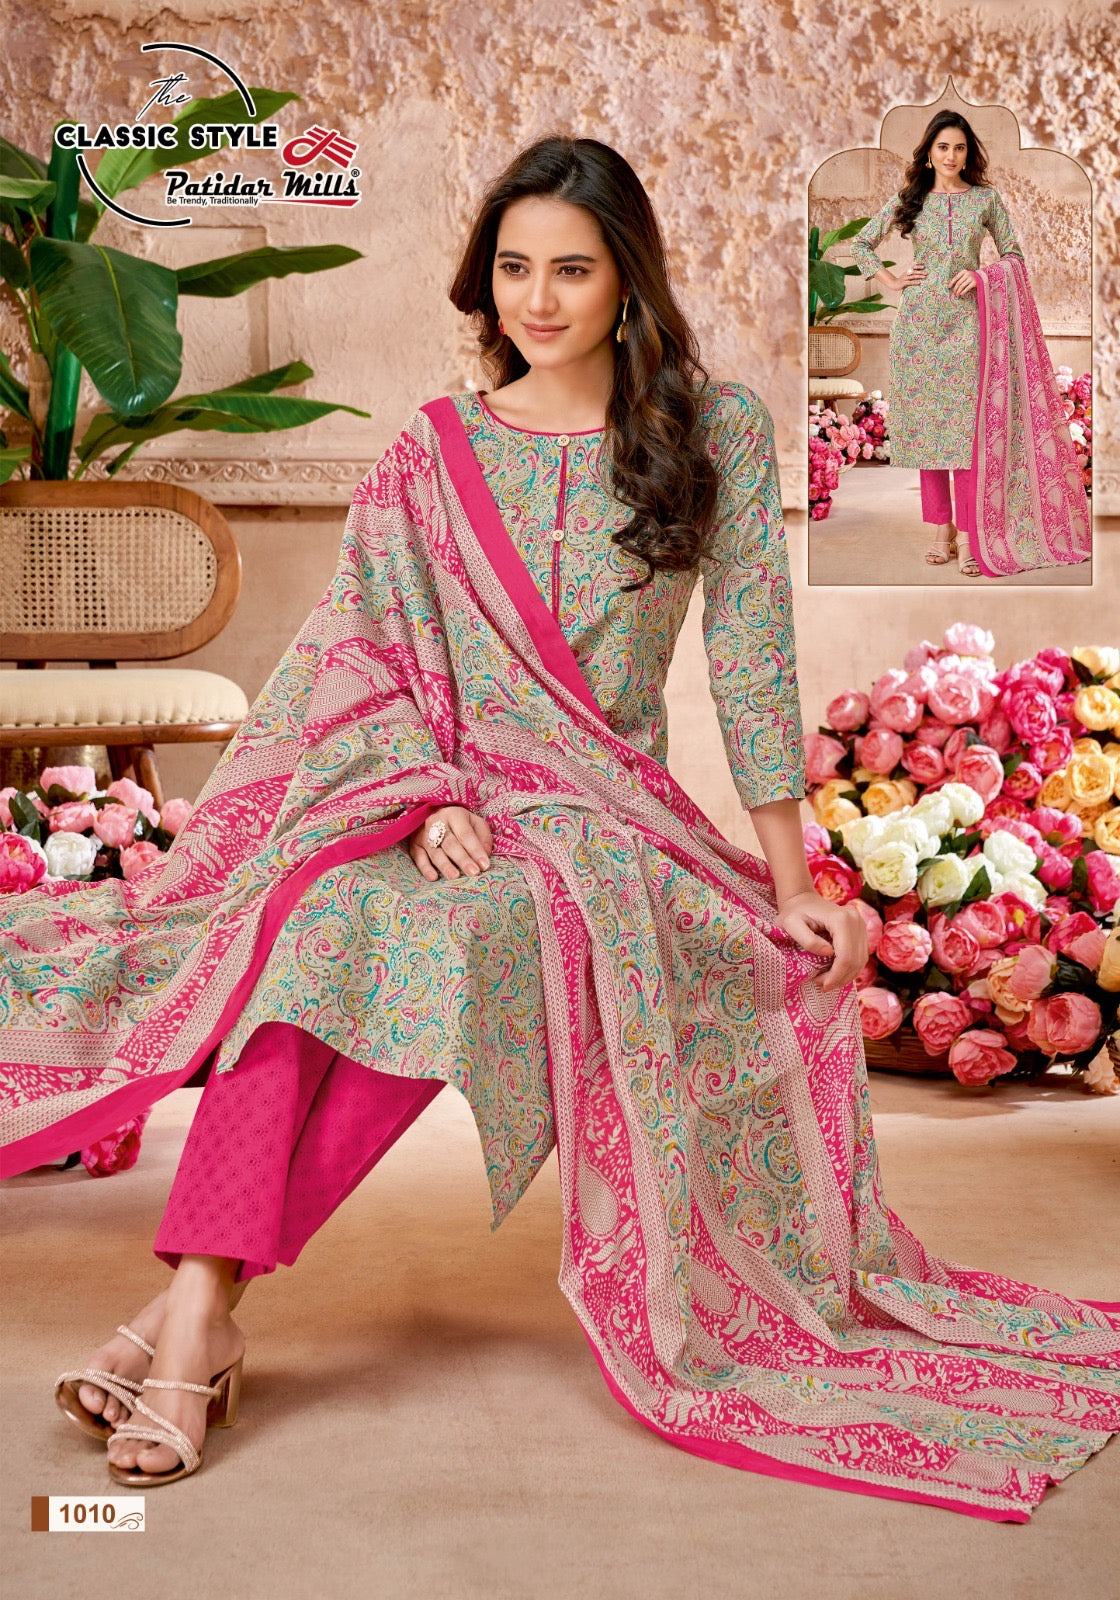 Patidar Mills The Classic Style Pure Cotton Printed Dress Material Jetpur